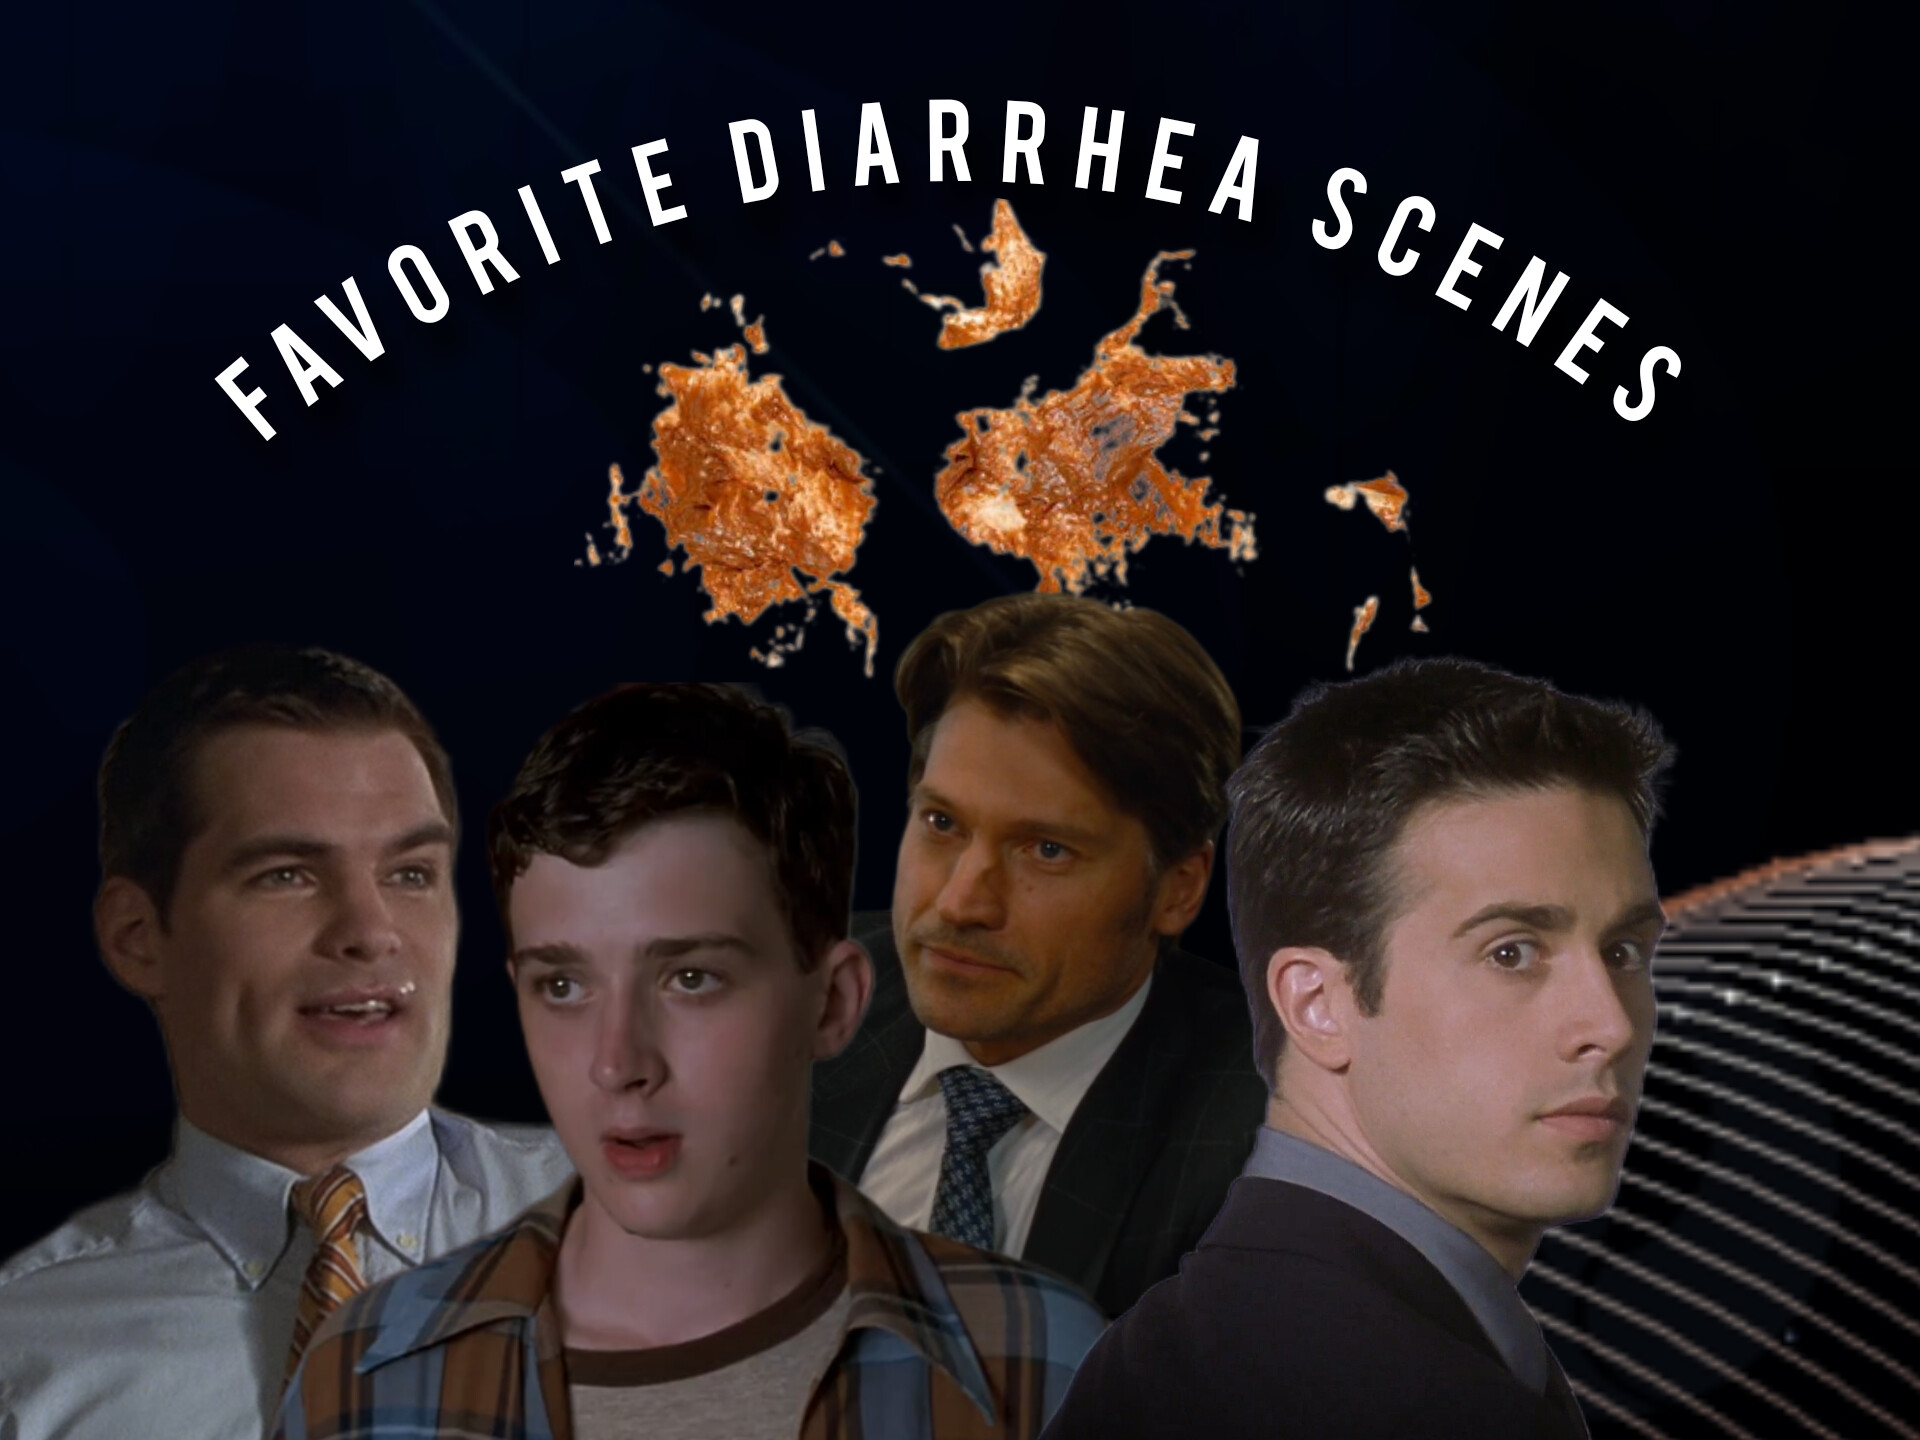 Favorite diarrhea scenes